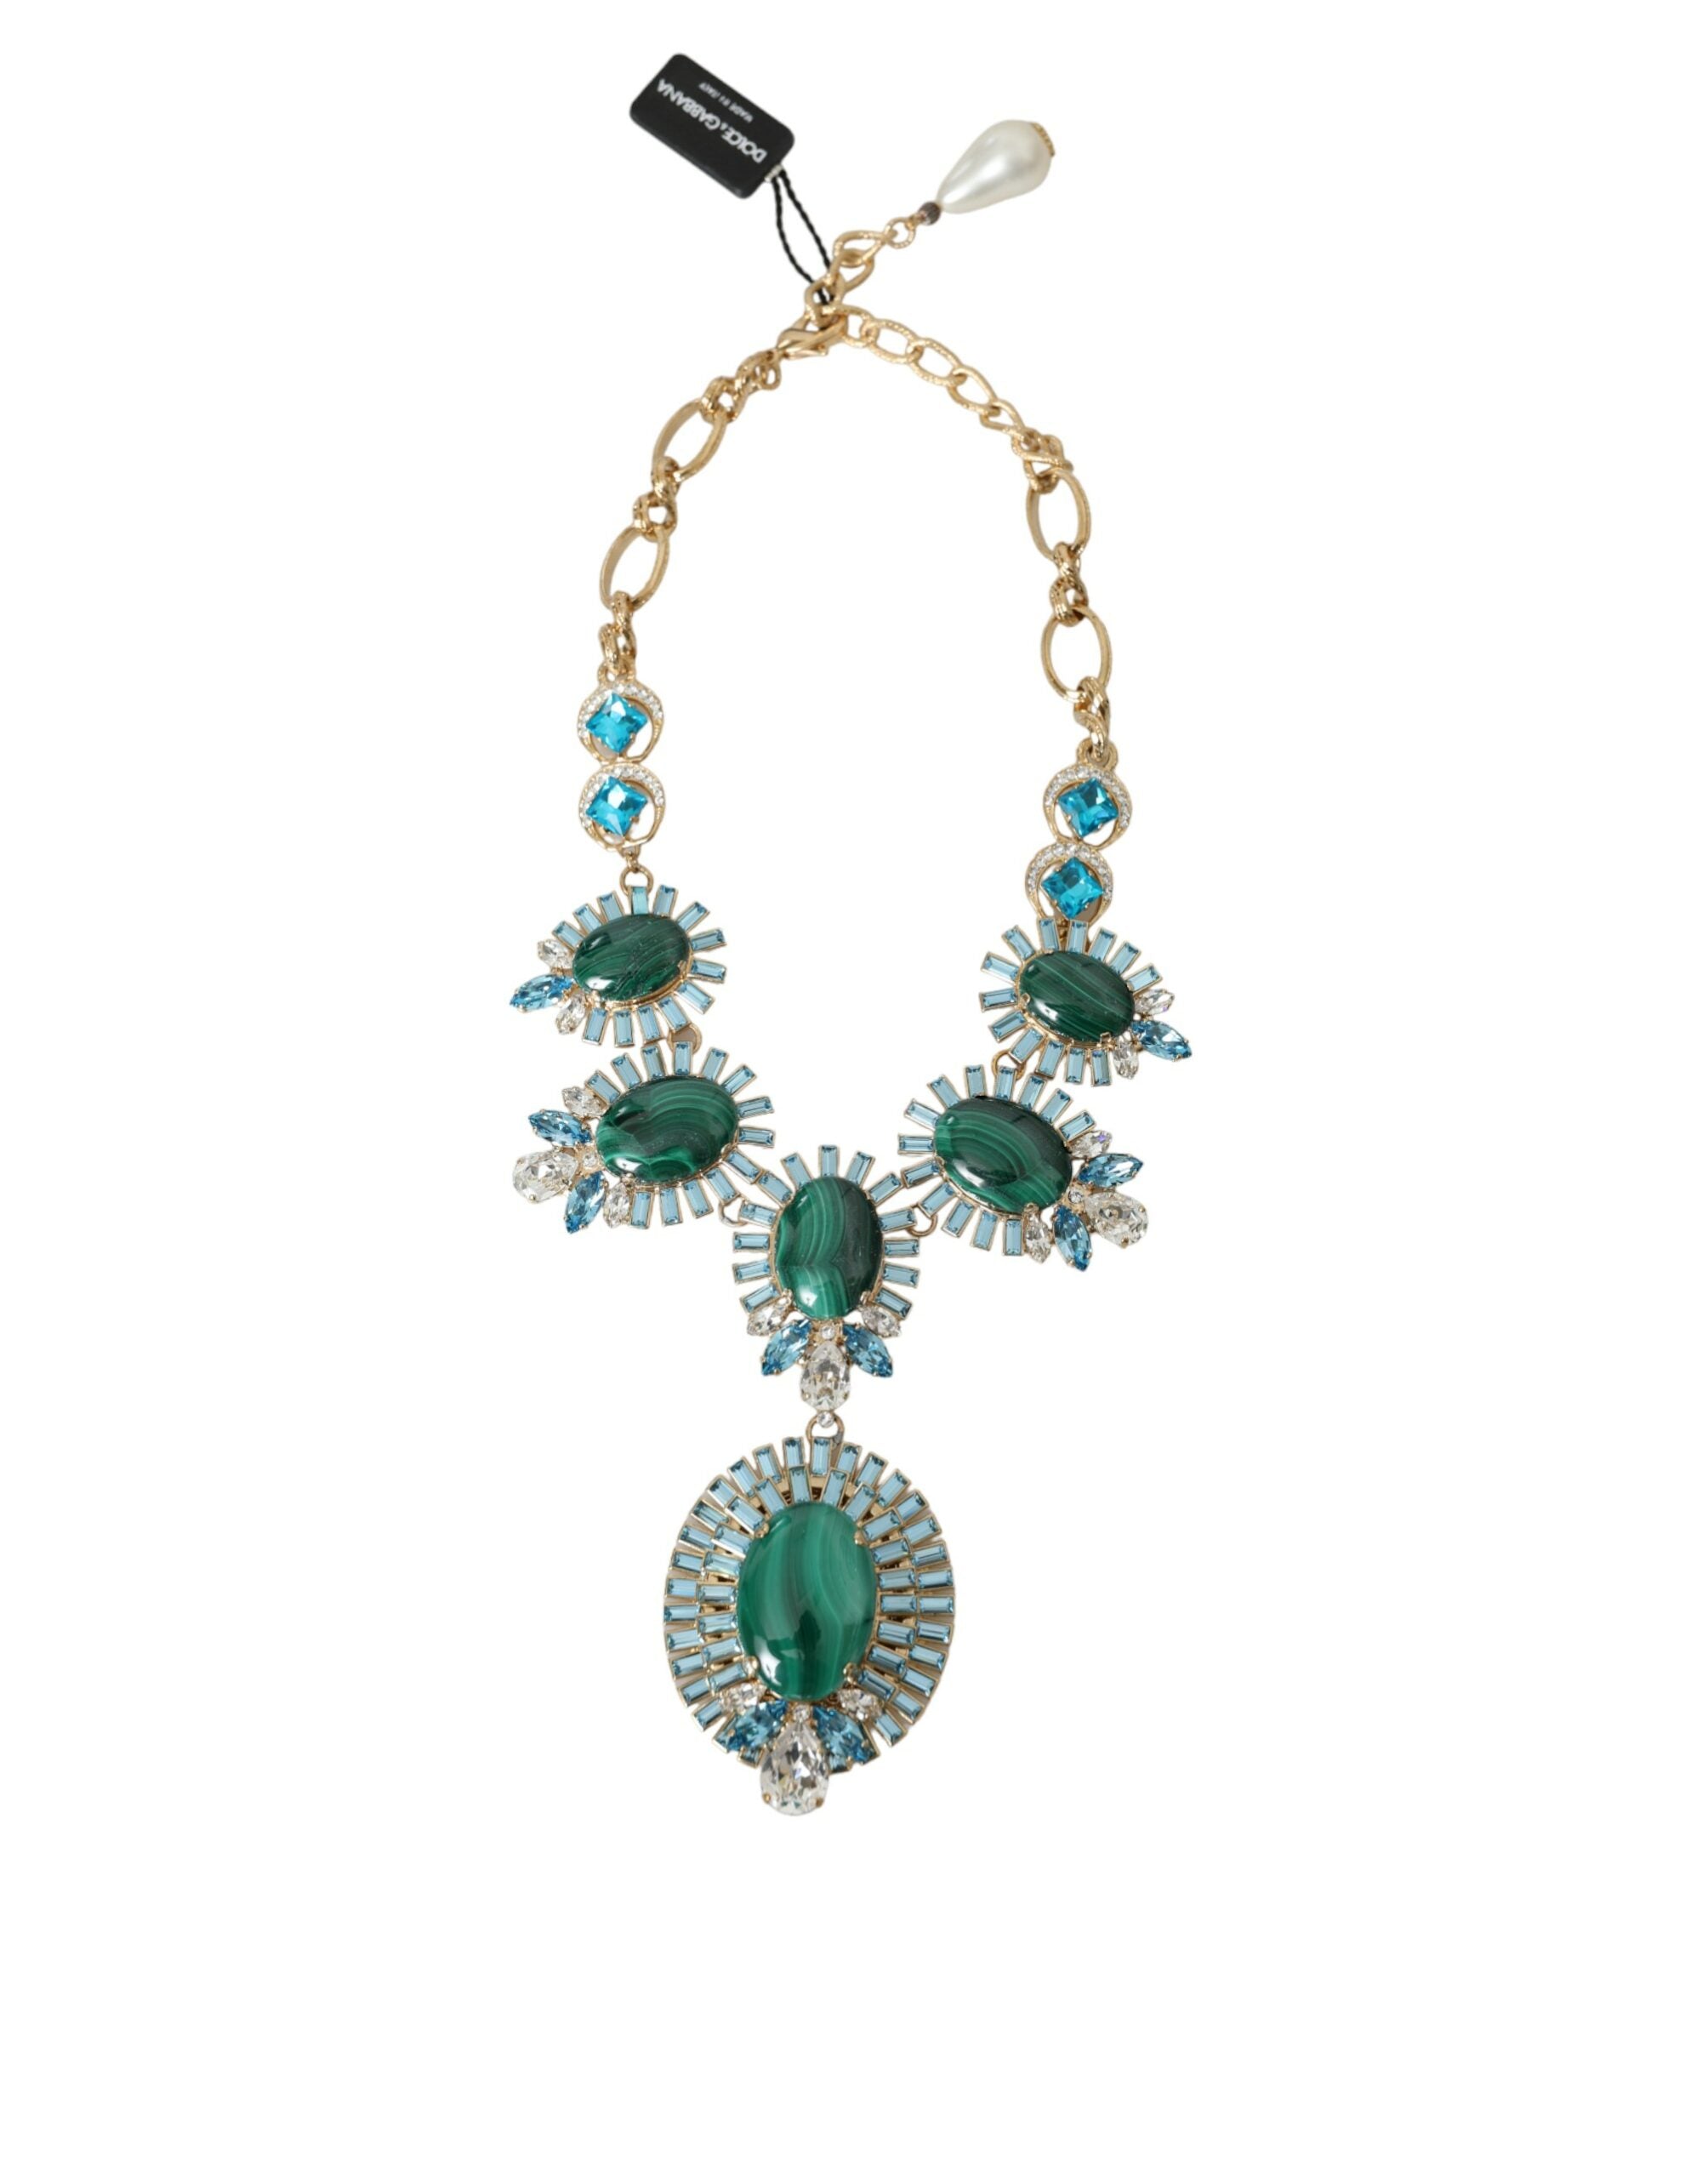 Gold ToneBrass PIETRE OVALI Crystal Embellished Necklace - Divitiae Glamour